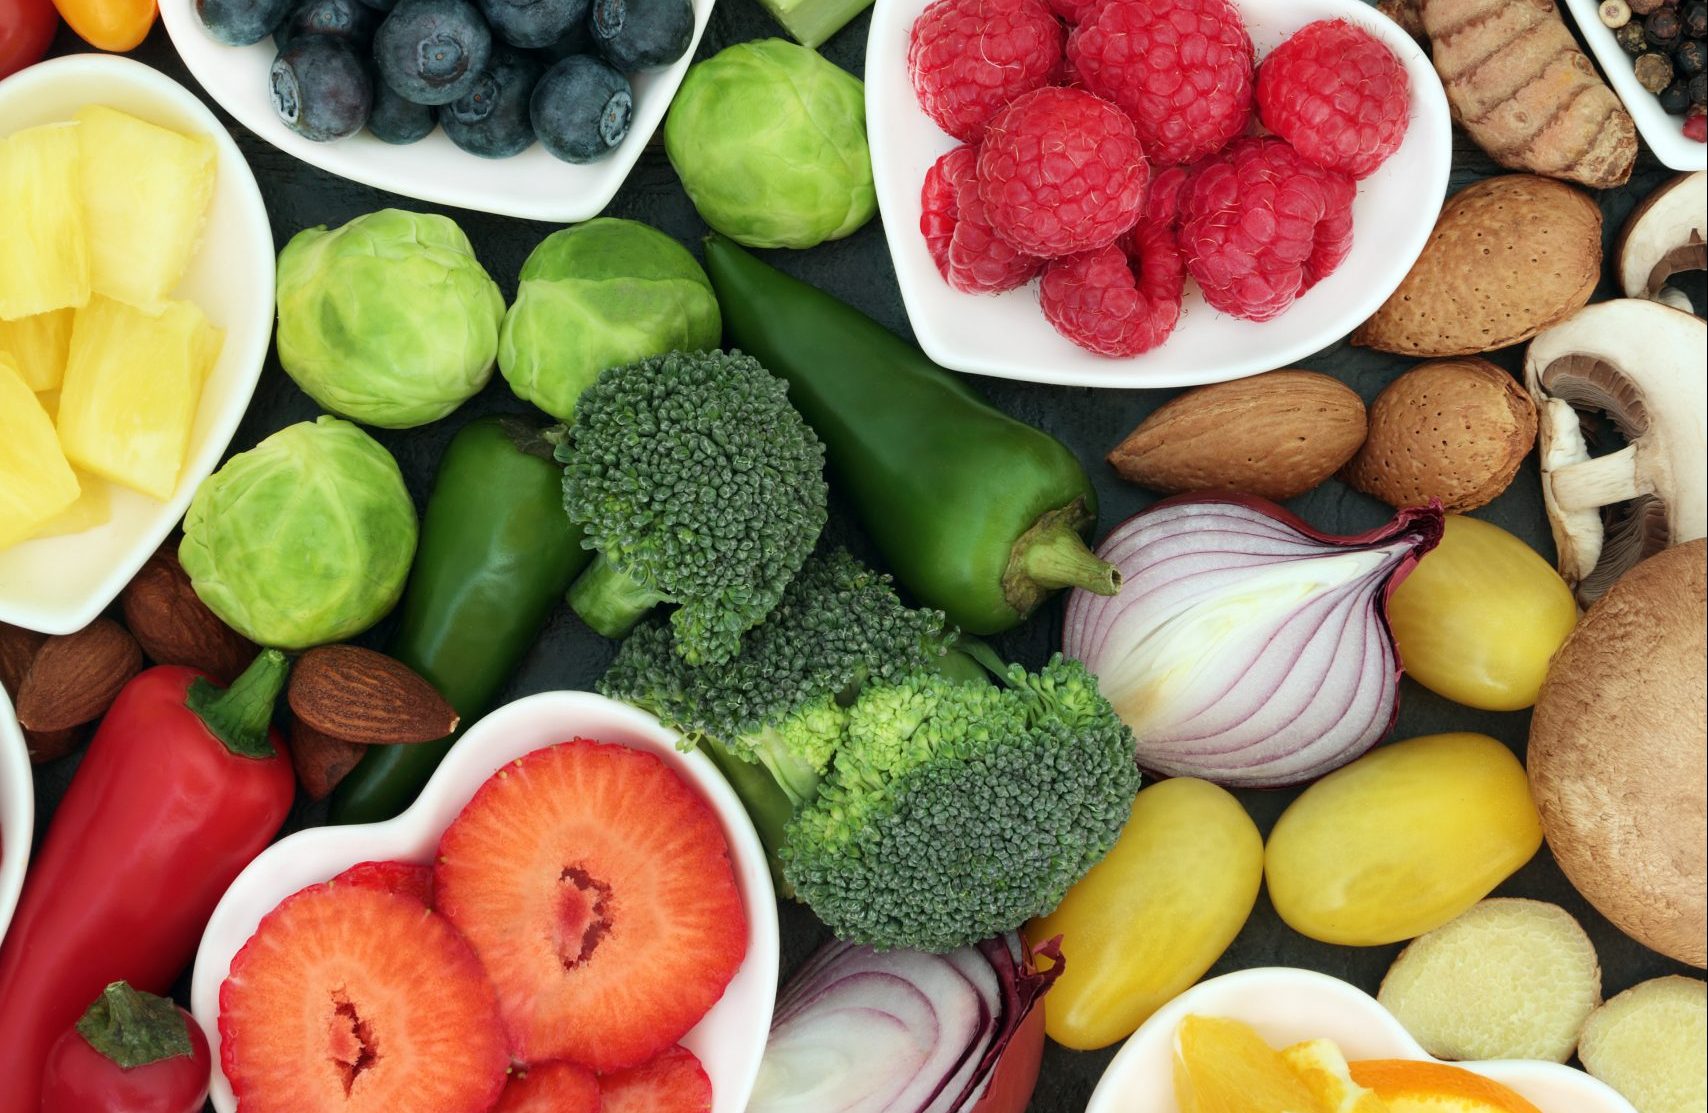 11 DIY Fruits and Veggies Body Scrub Recipes